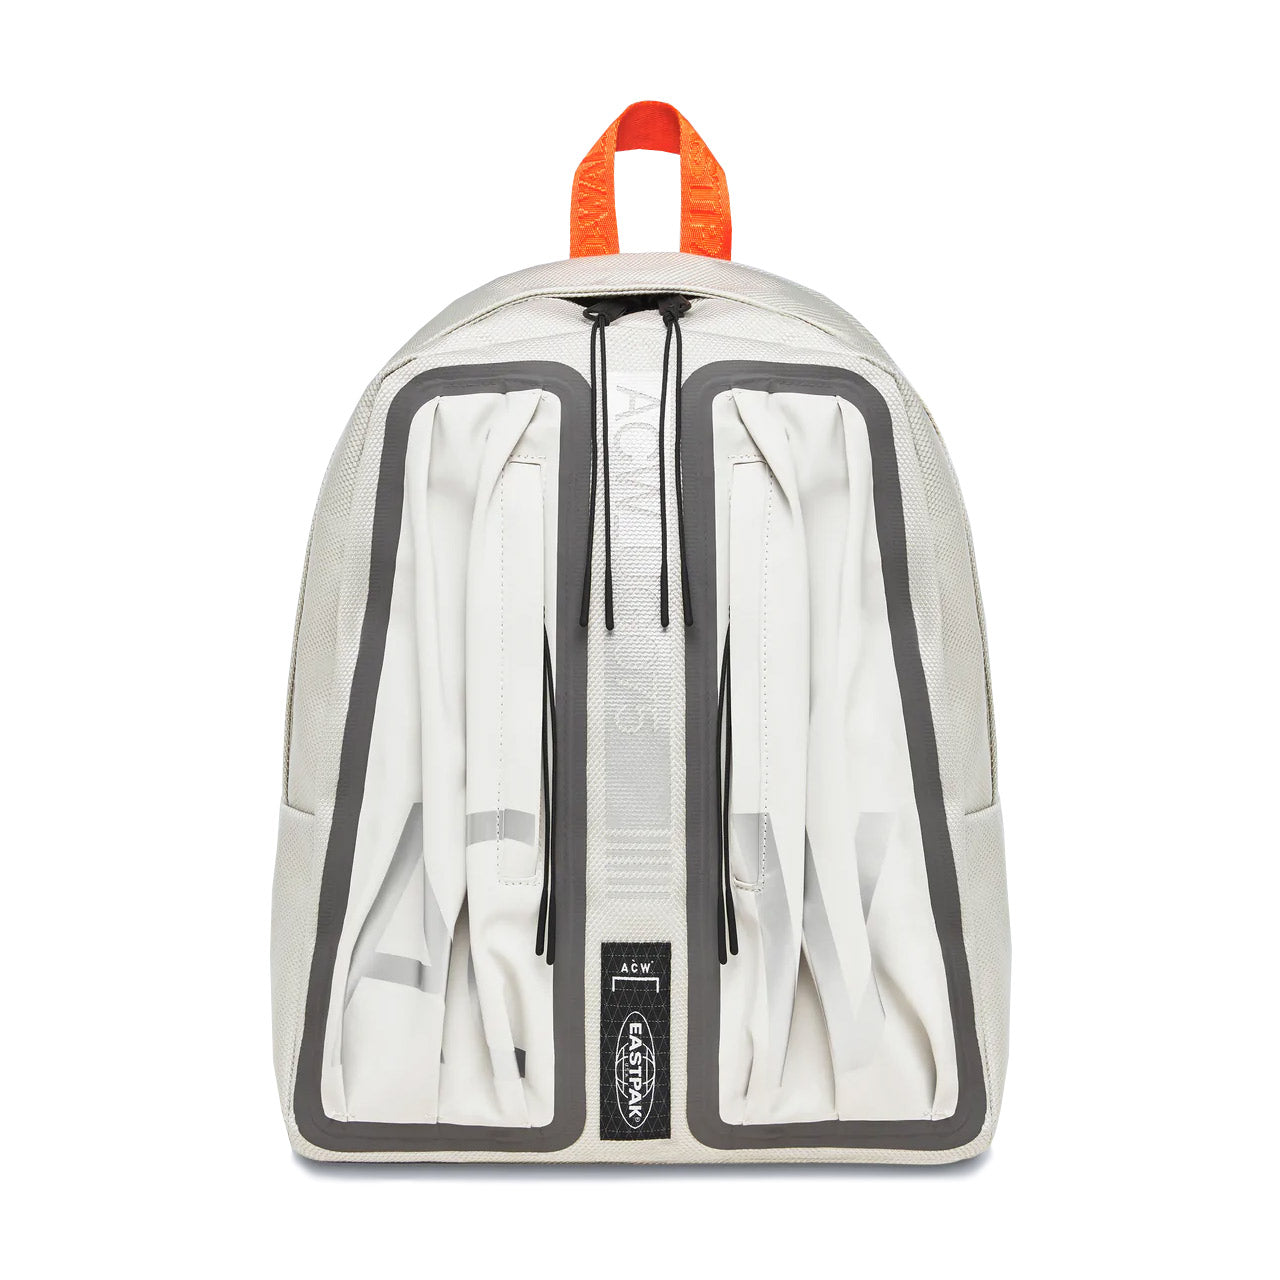 Acquiesce Maar Informeer a-cold-wall* x eastpak ruched backpack (beige / orange)